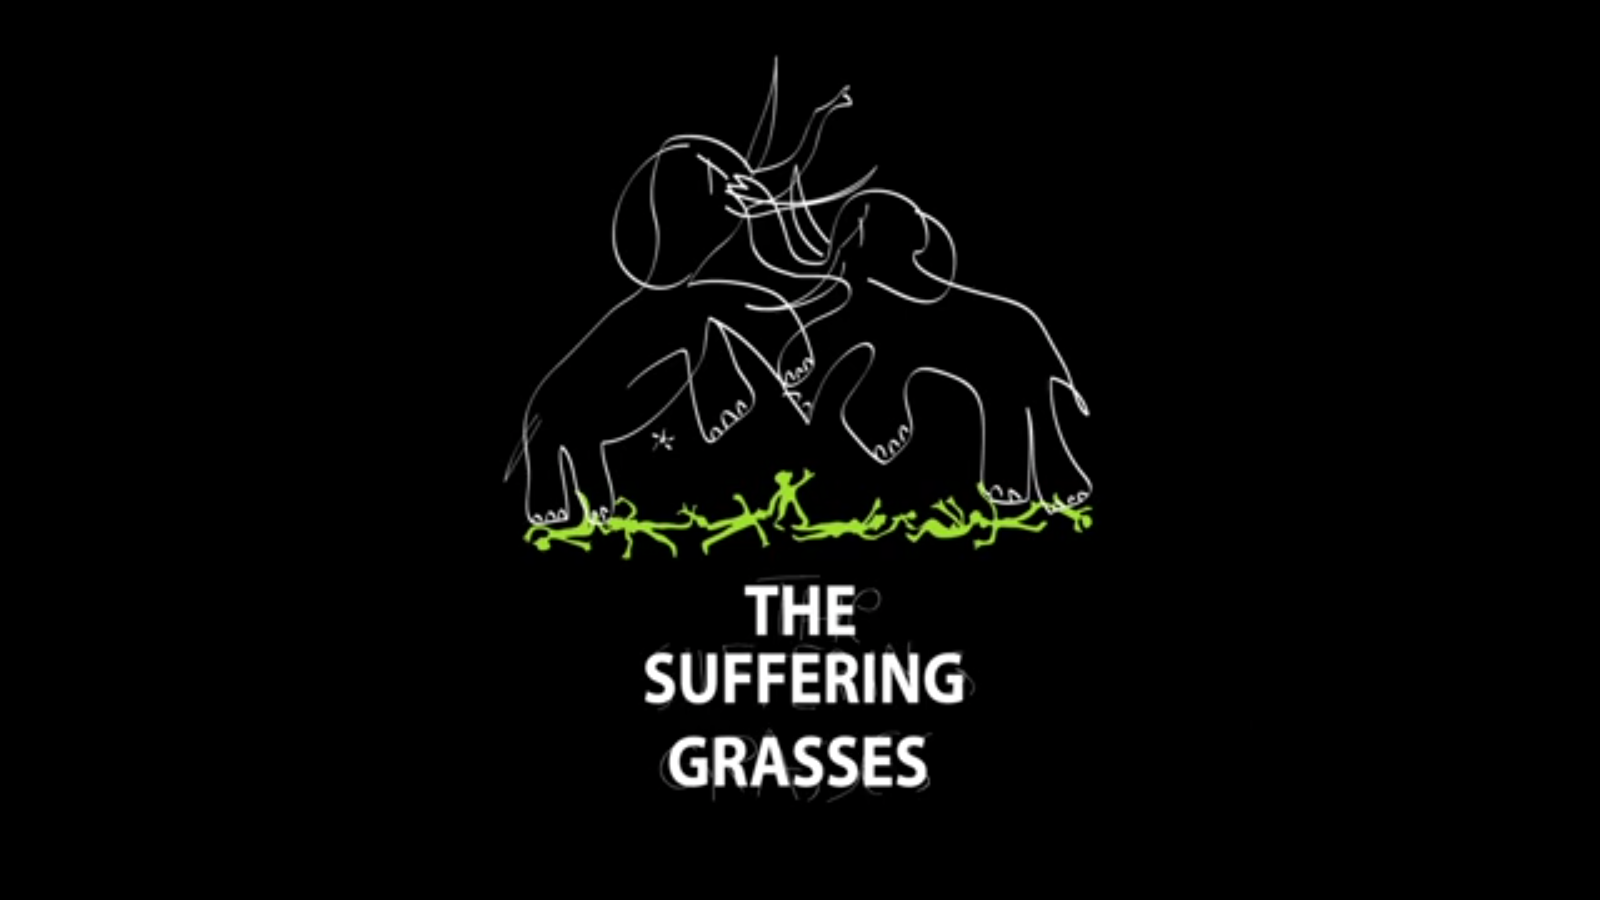 -The Suffering Grasses- Trailer on Vimeo